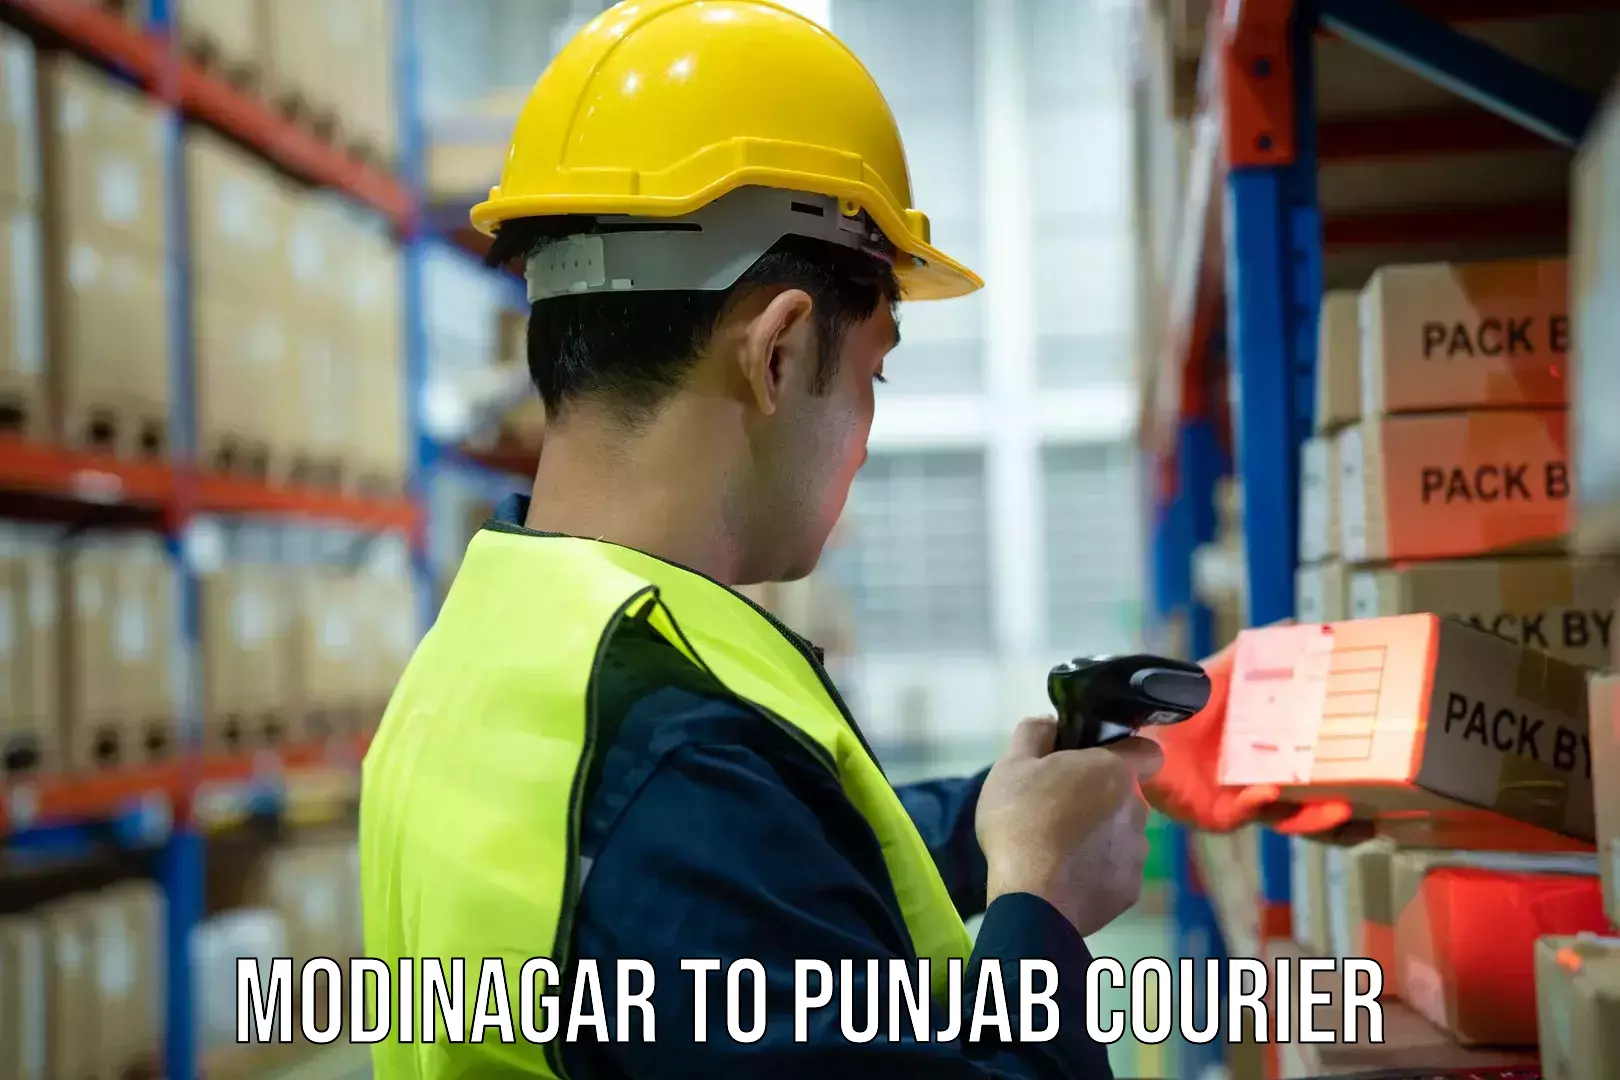 Local delivery service Modinagar to Punjab